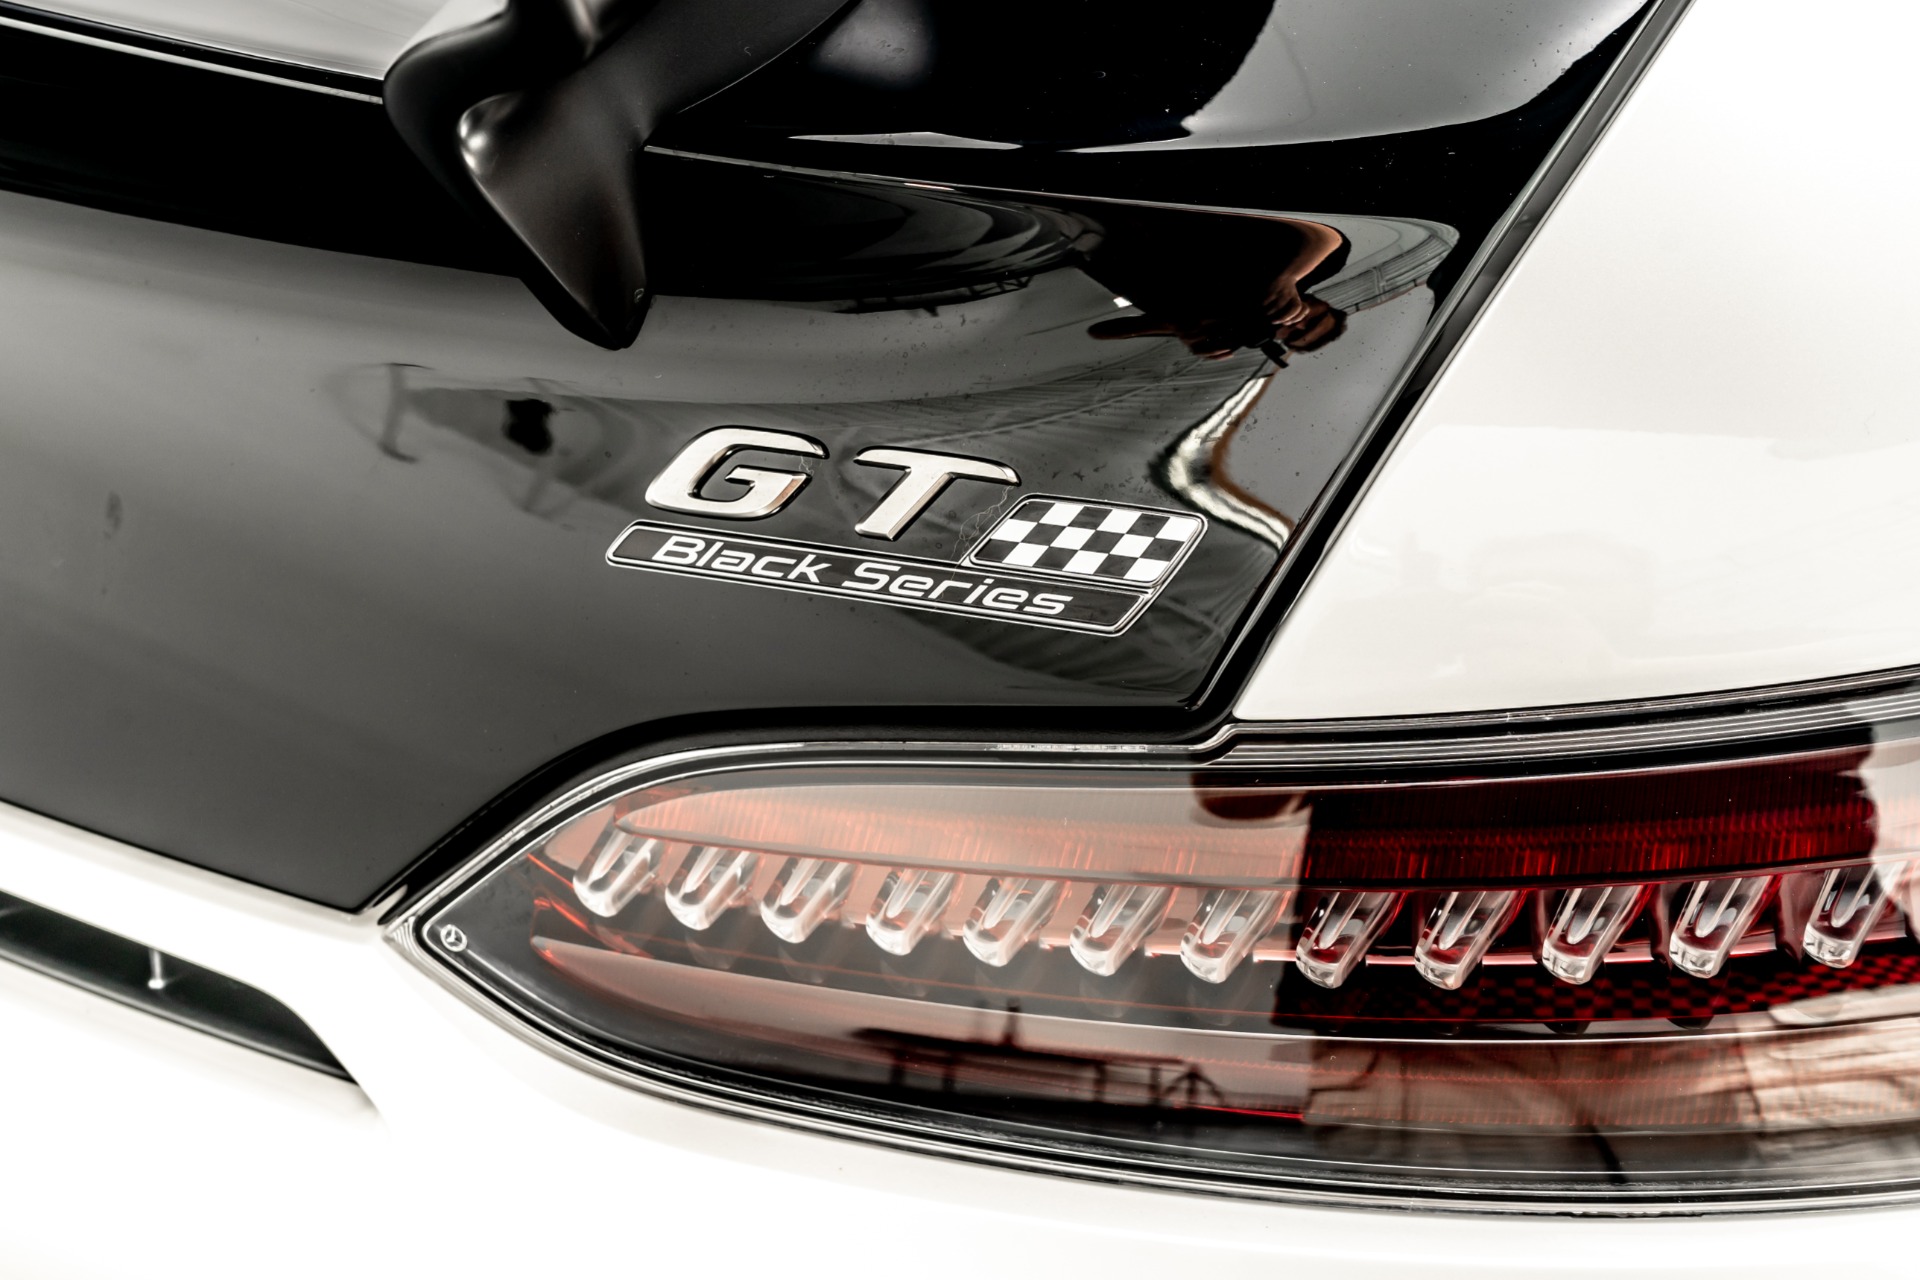 Mercedes Benz AMG Brabus Maybach Audi Car Logo Vinyl Sticker Decals